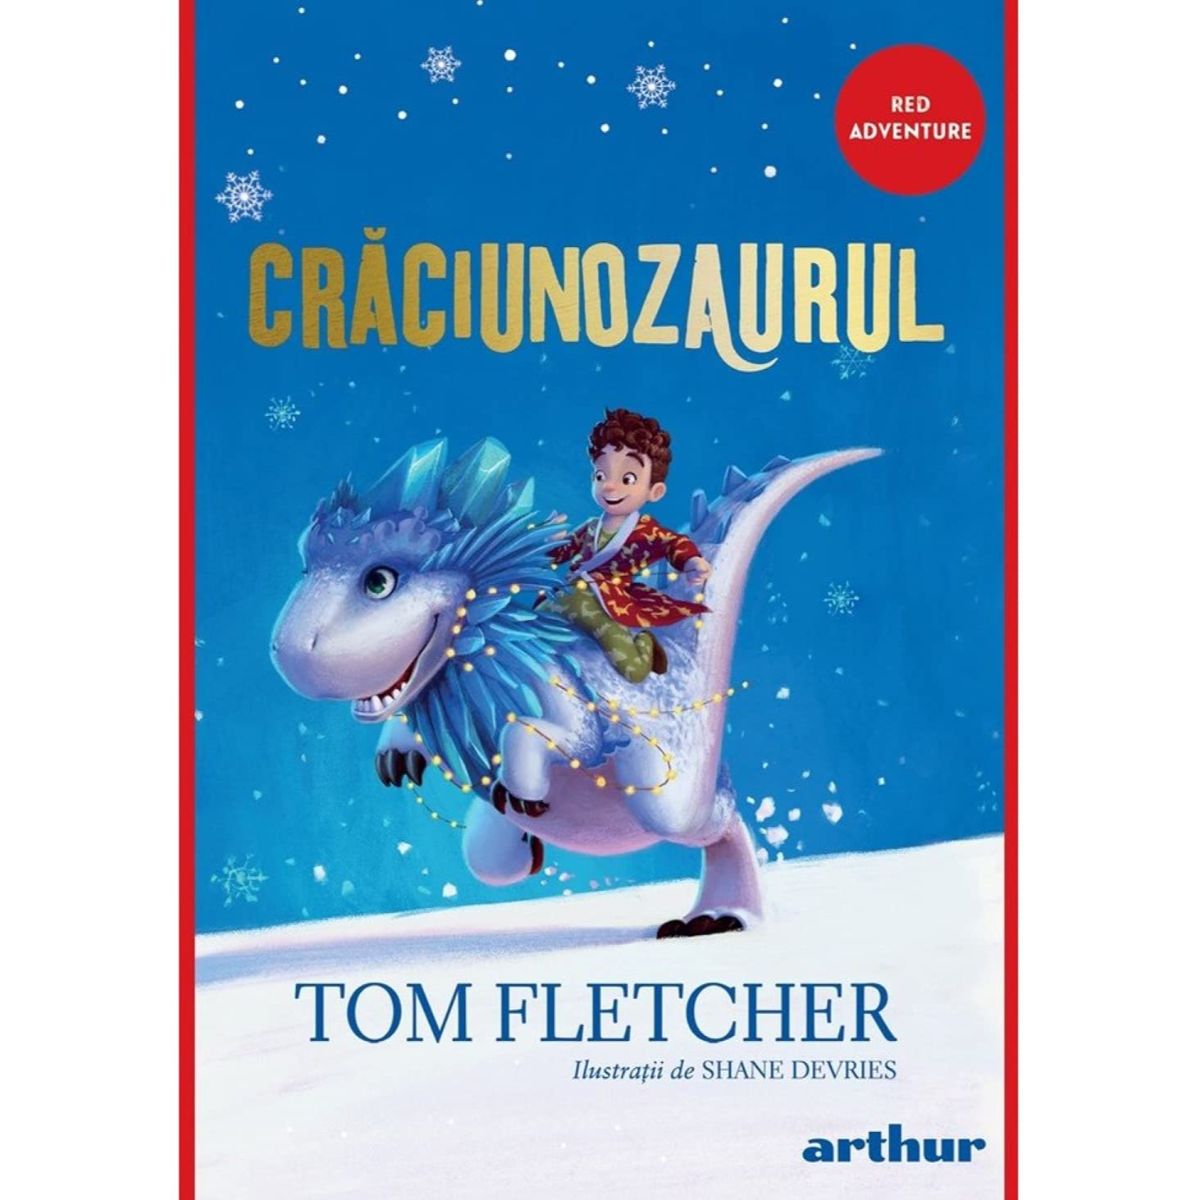 Craciunozaurul, Tom Fletcher, Editura Art